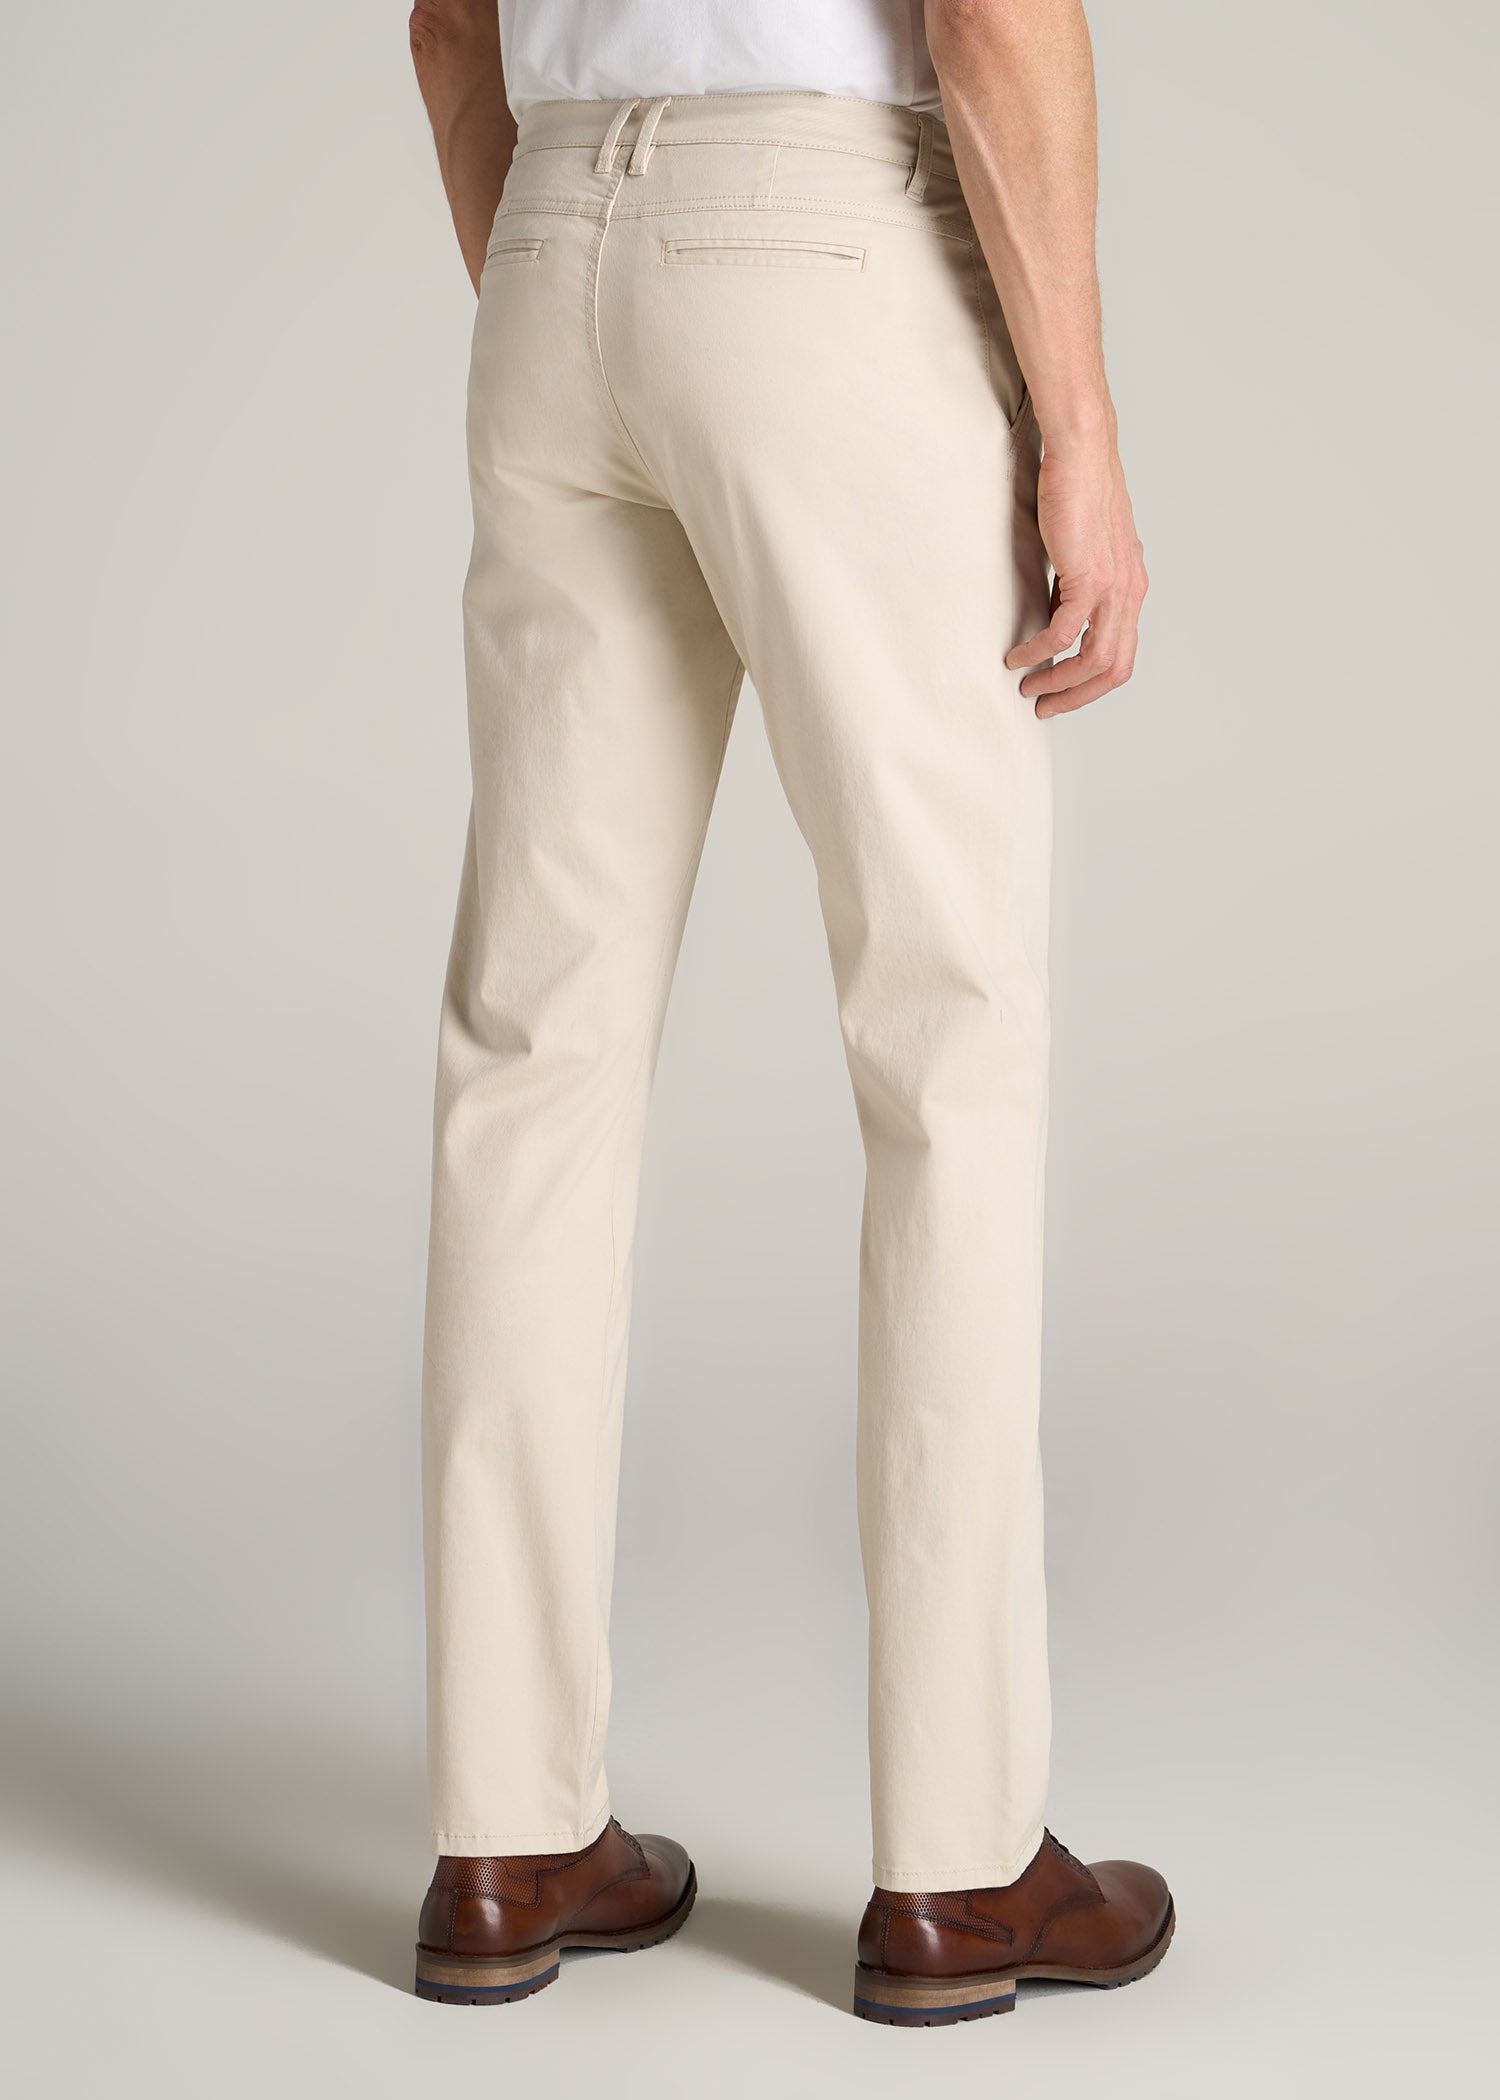 Jinda Men's Linen Casual Pants Long Trousers Casual Lounge Elastic Waist  Loose Soft Tapered Drawstring Pants Cream X-Large - Walmart.com